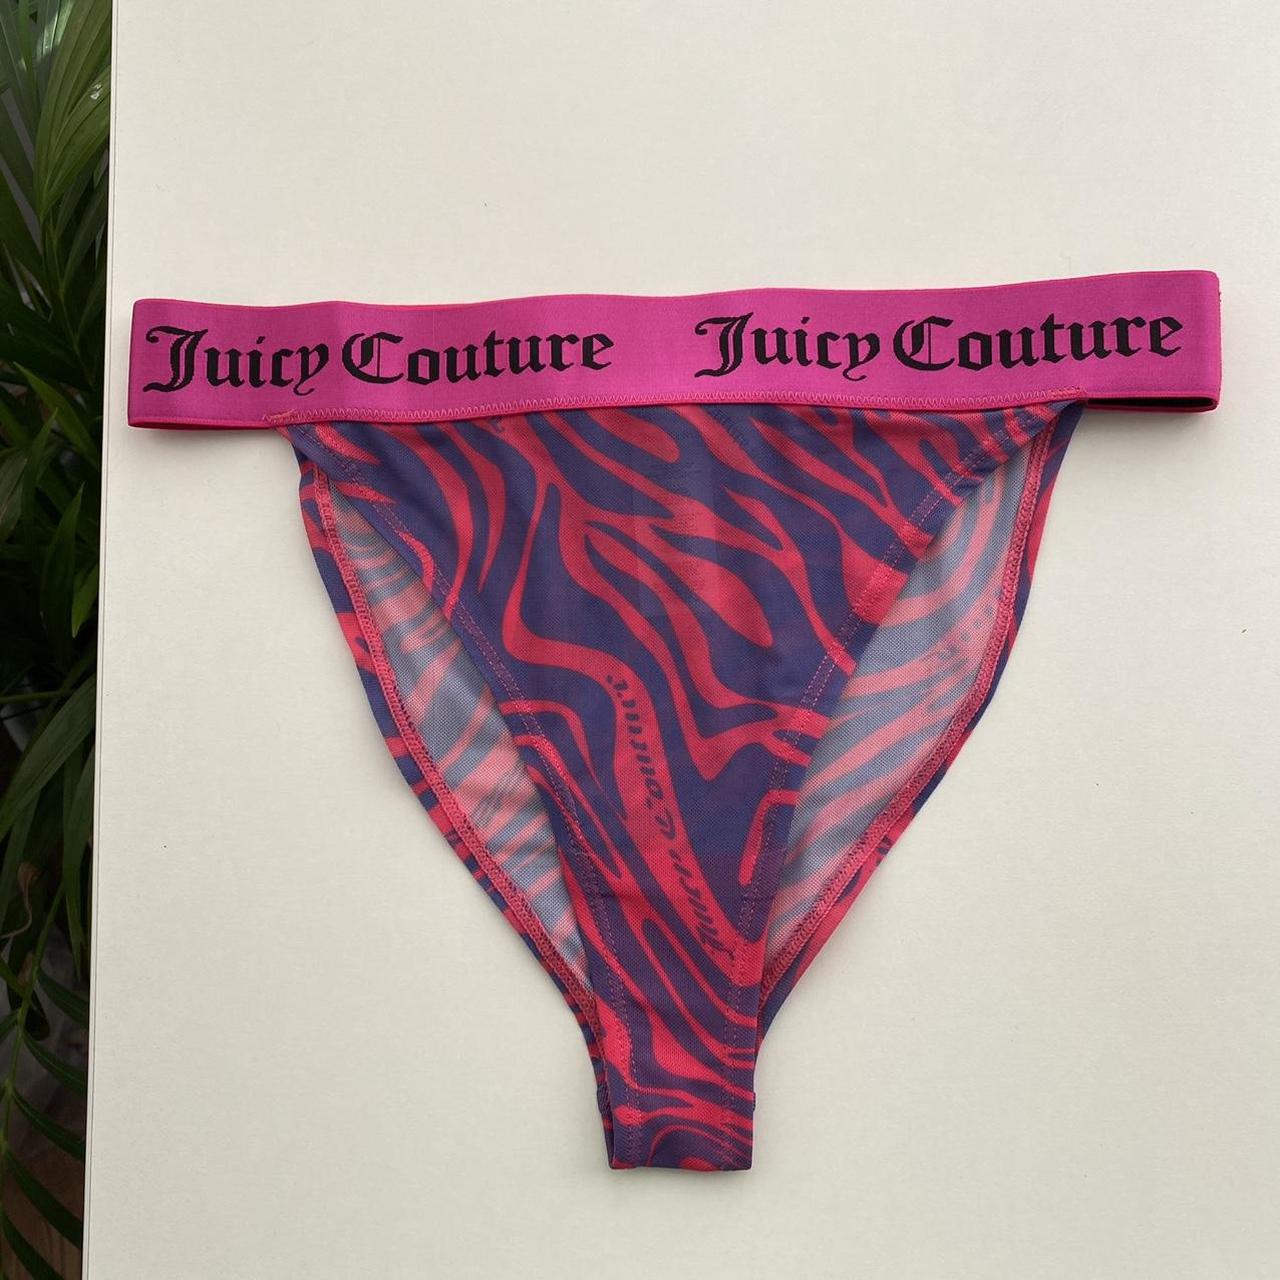 item - juicy couture underwear , brand - juicy